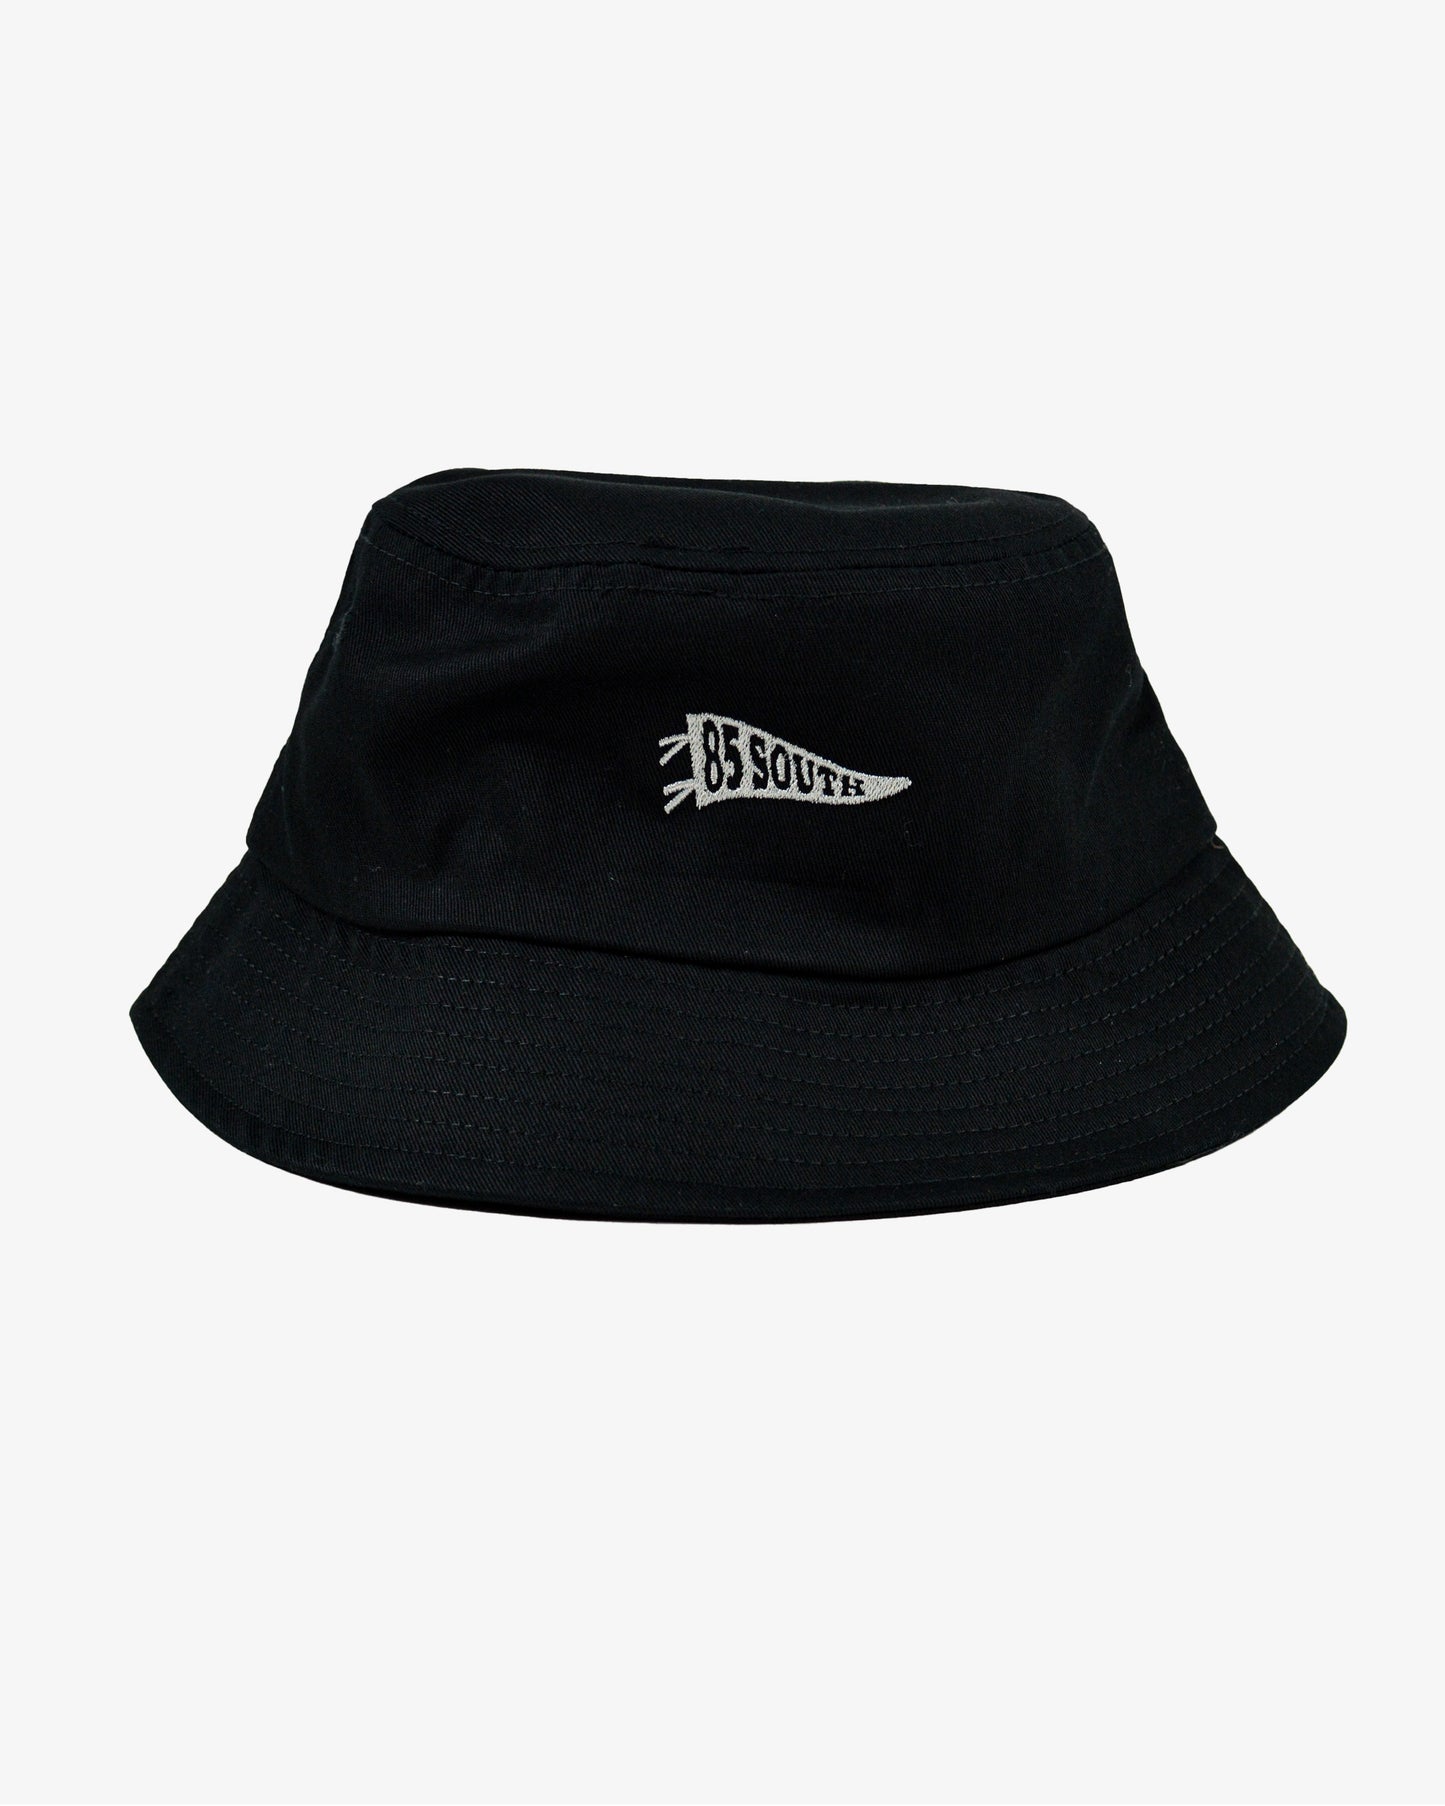 Monochrome South Bucket Hat - Black